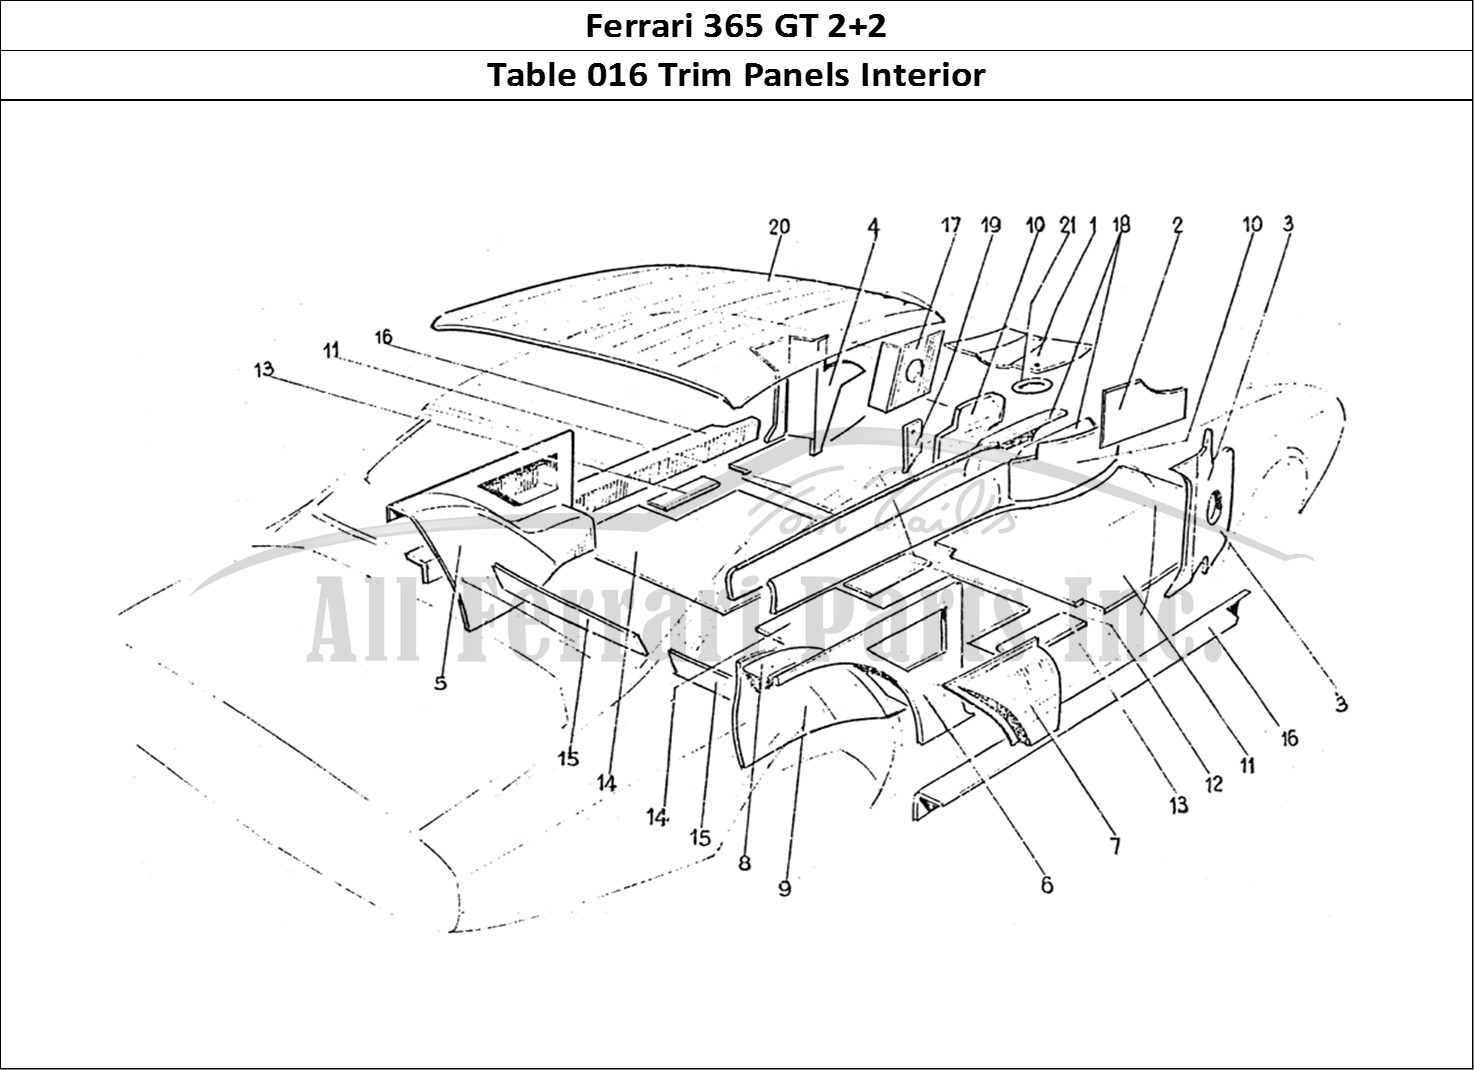 Ferrari Parts Ferrari 365 GT 2+2 (Coachwork) Page 016 Inner trim panels